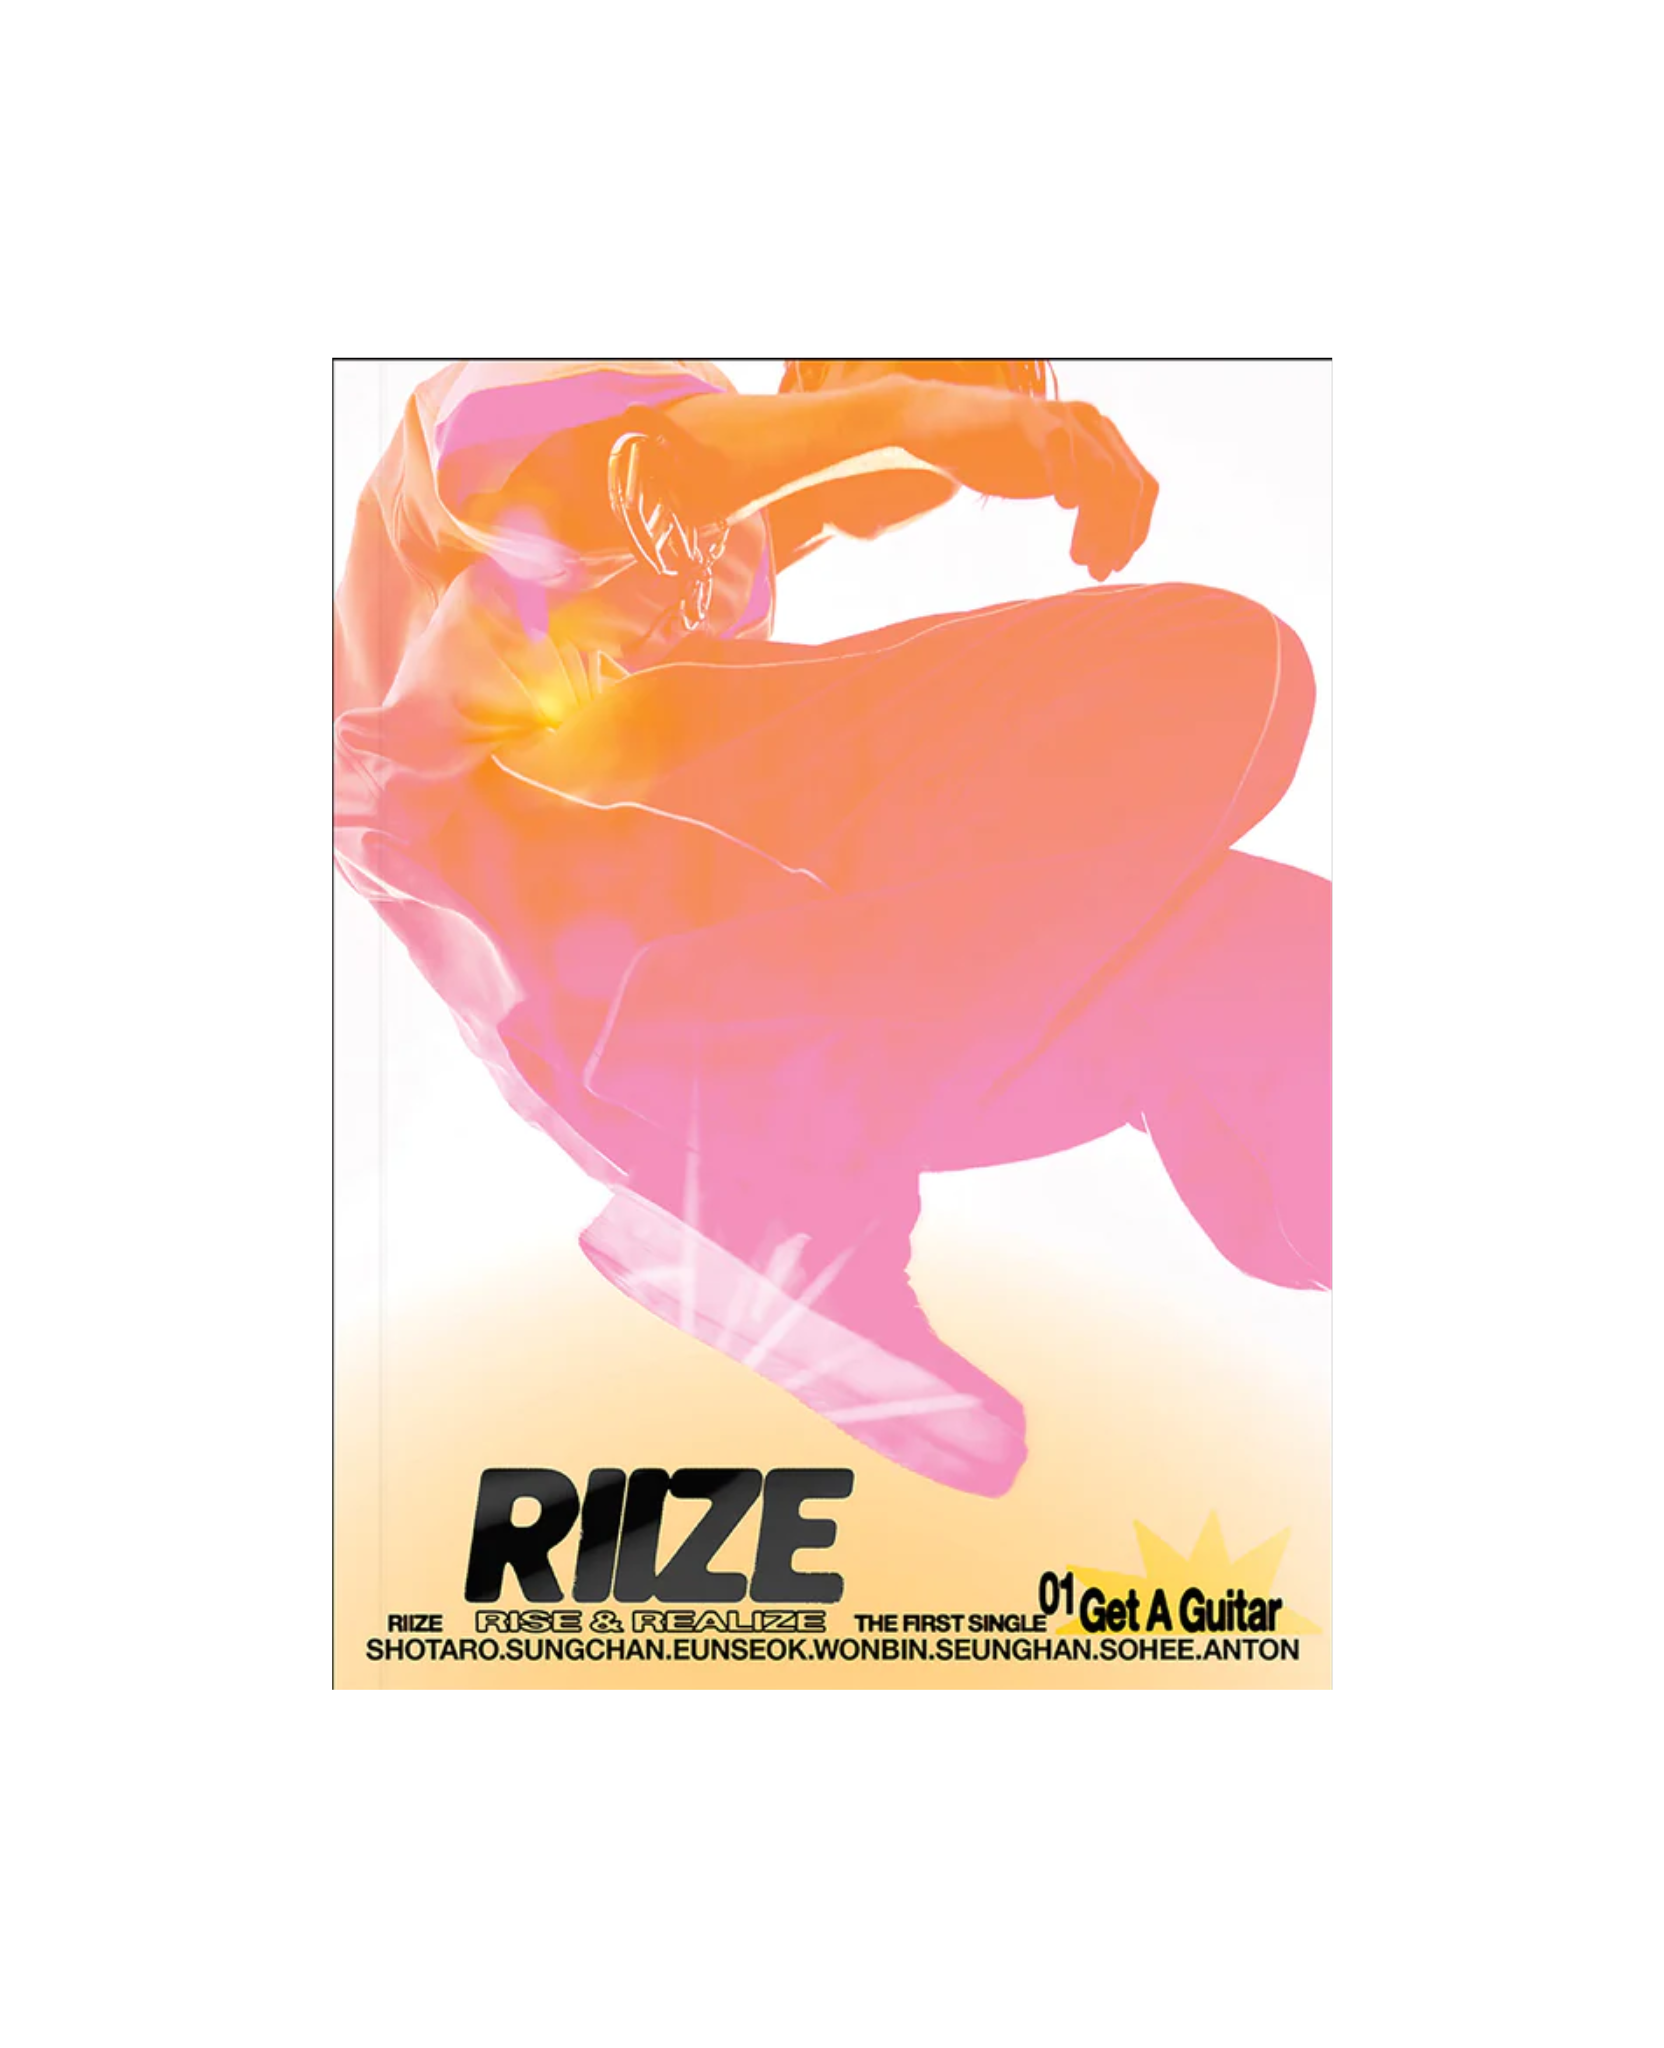 RIIZE Get A Guitar - Photobook Version (2 Types Random) RIIZE